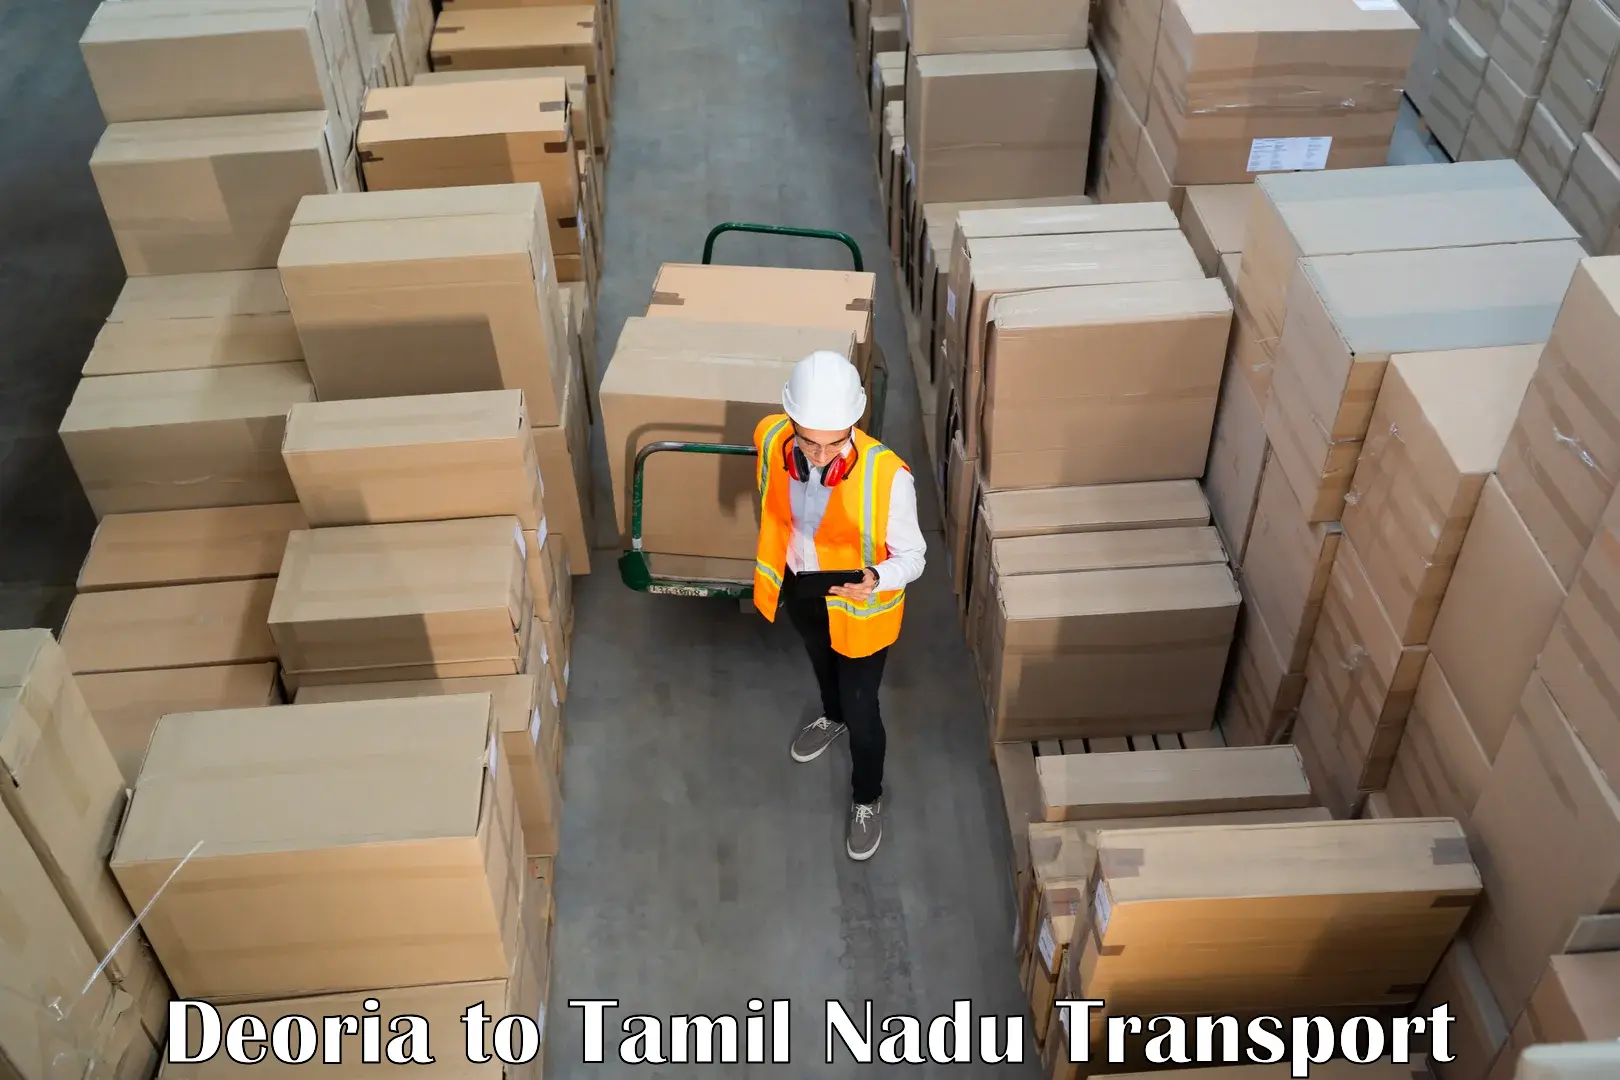 Furniture transport service Deoria to Sriperumbudur